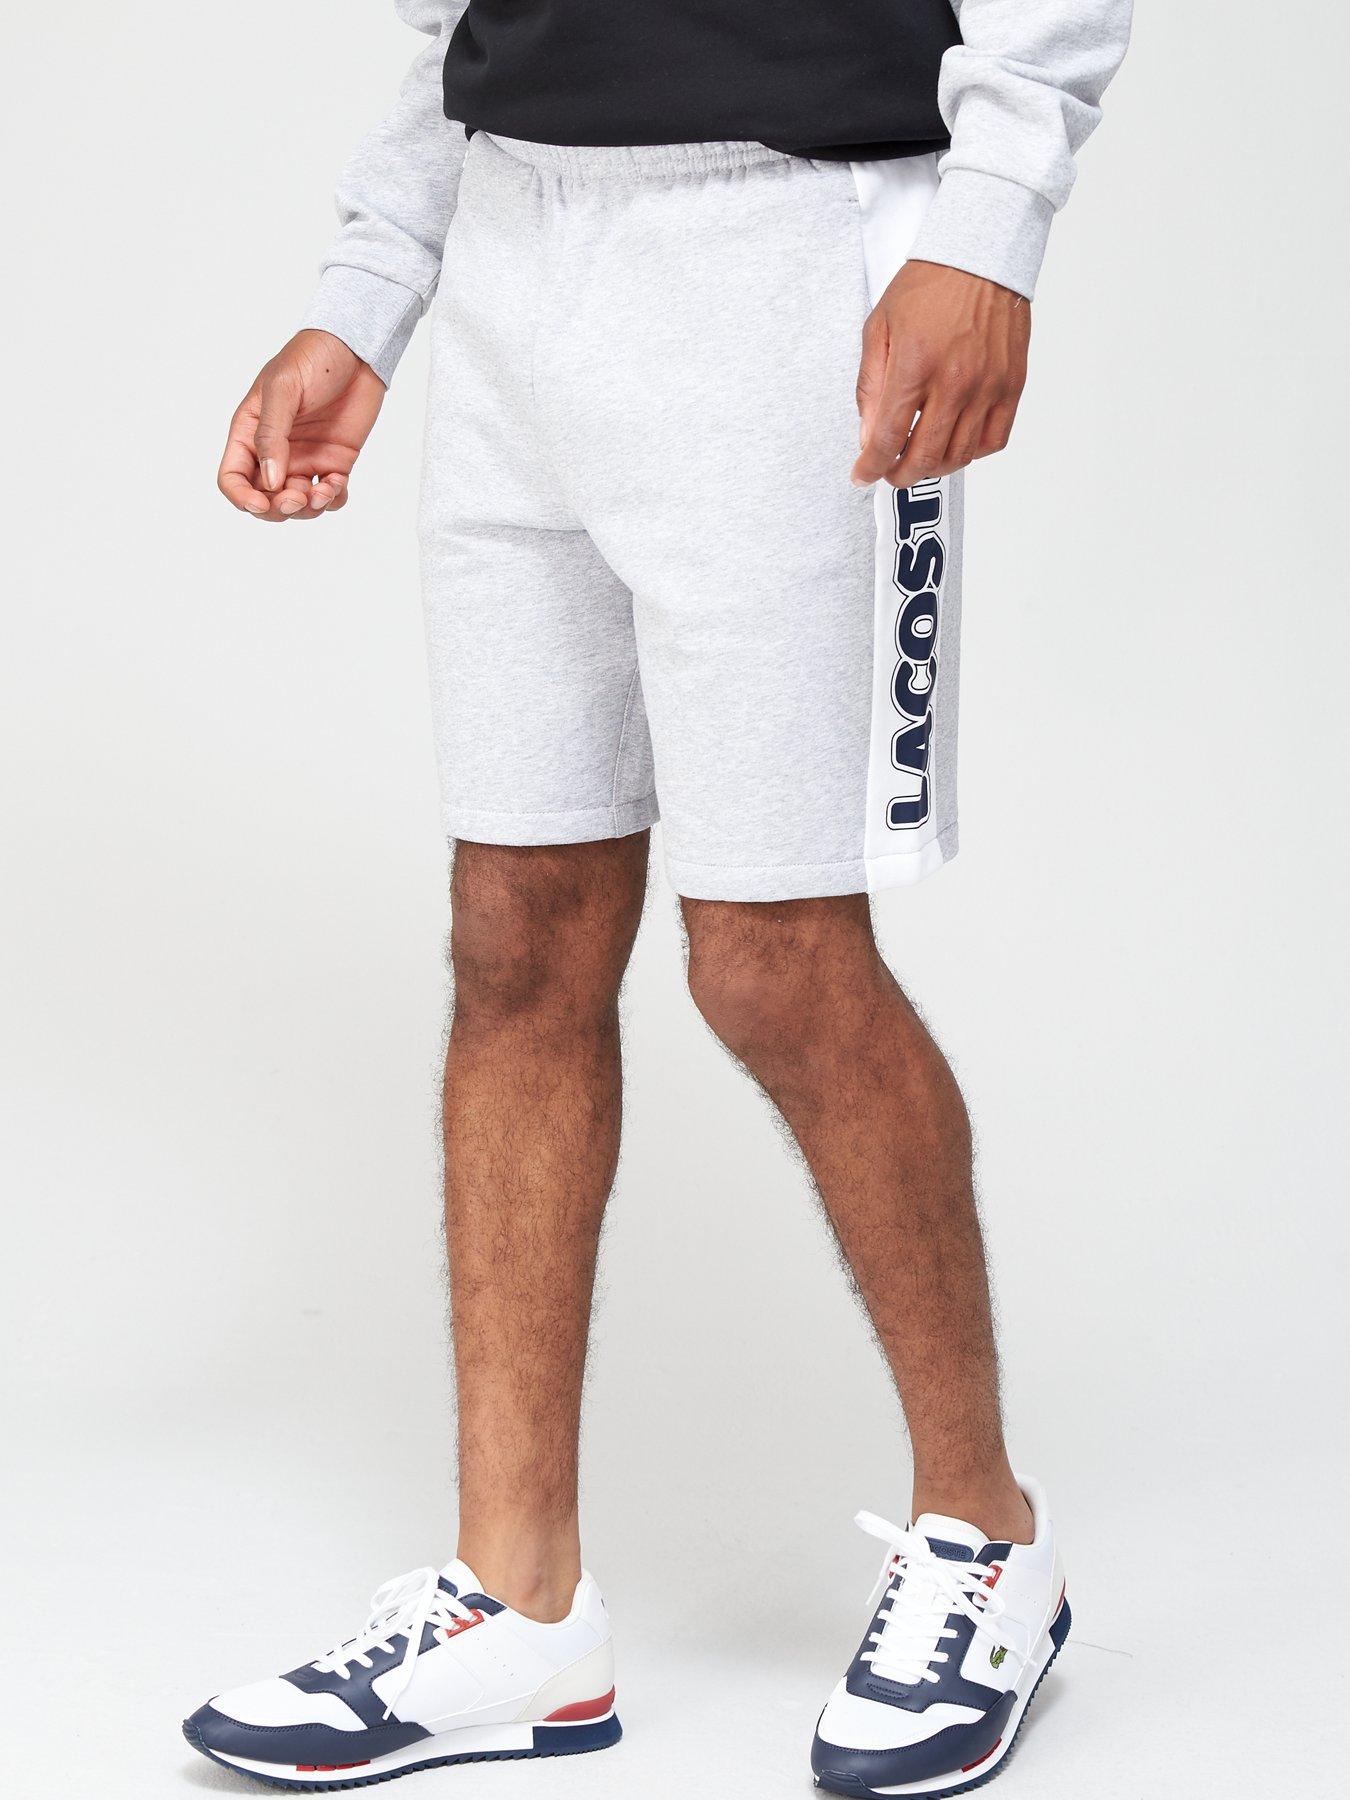 mens grey lacoste shorts